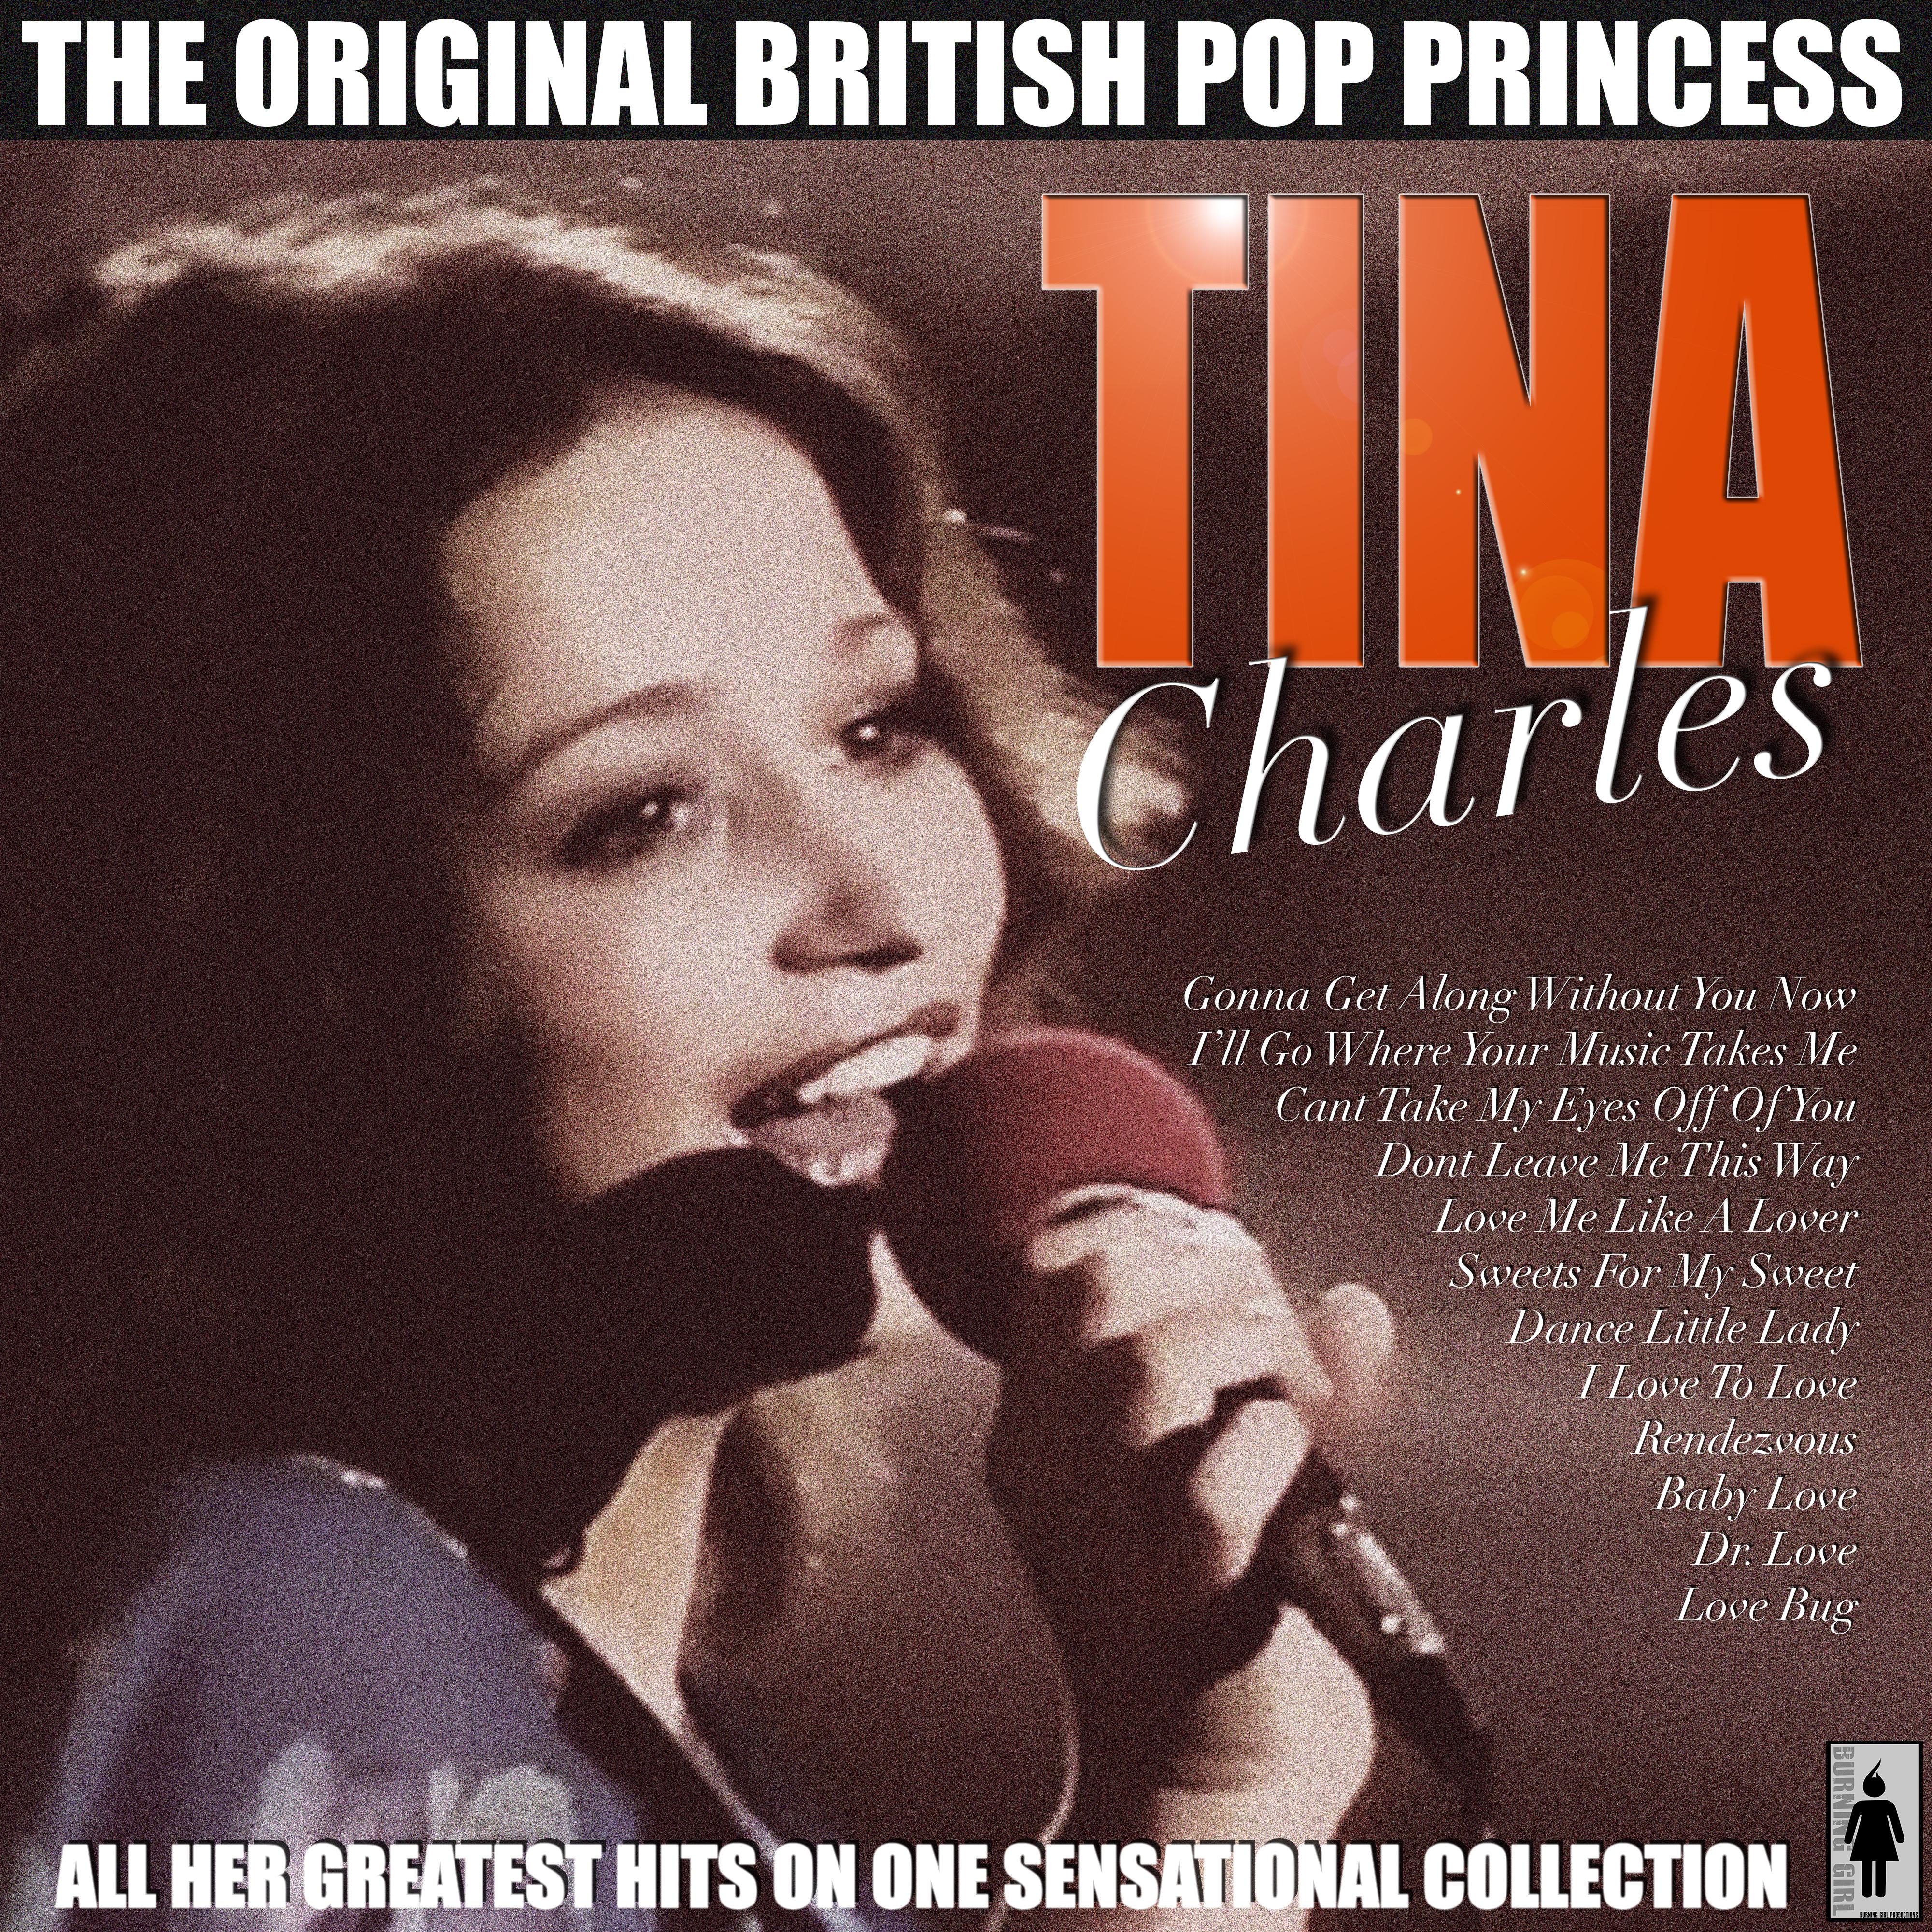 Tina Charles - Greatest Hits